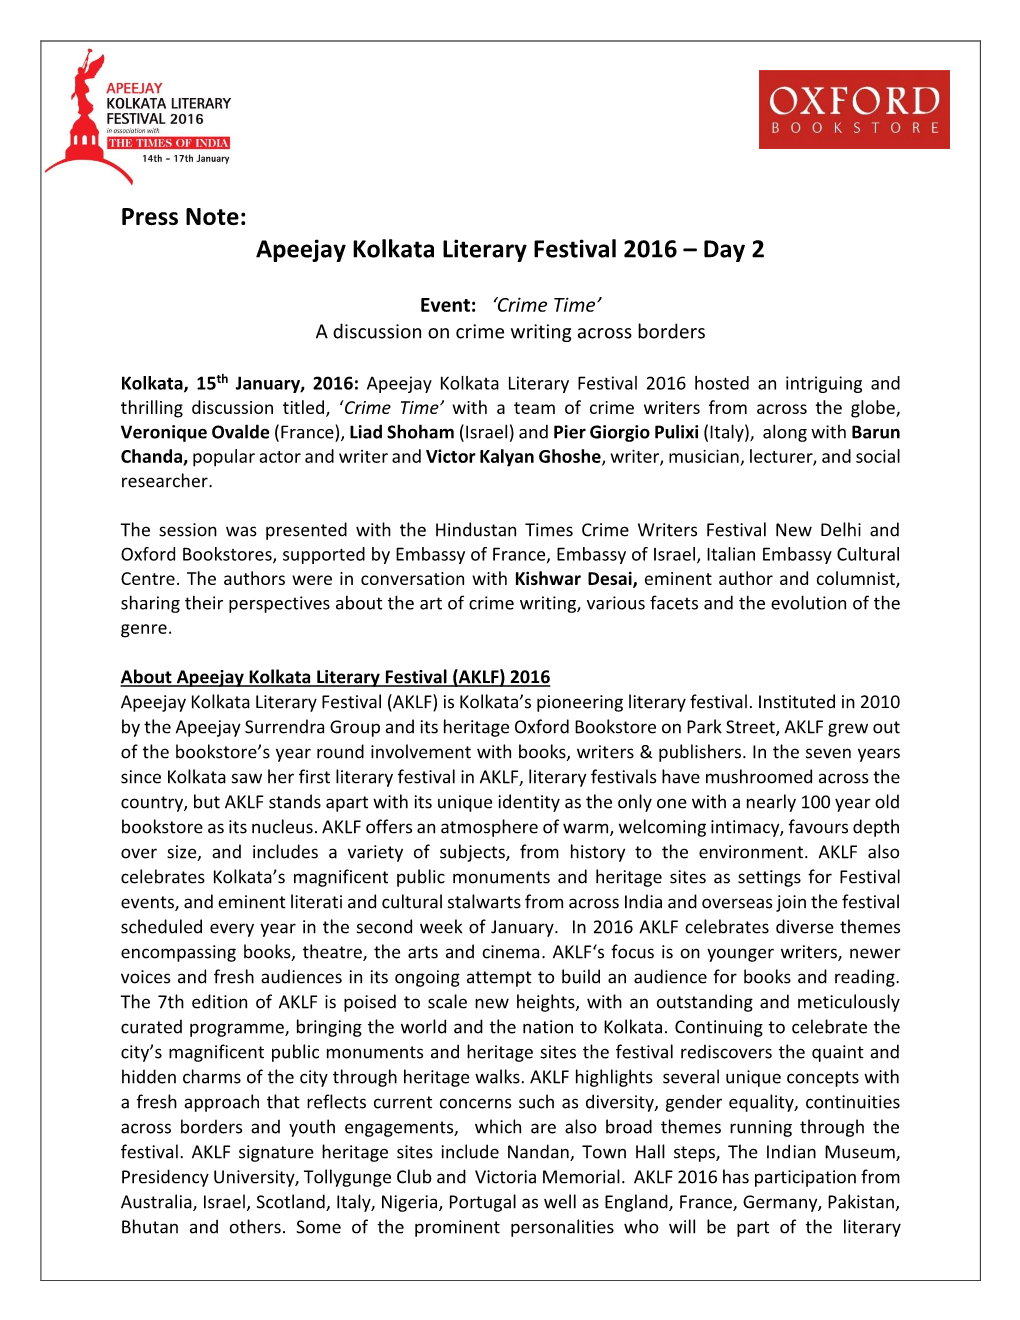 Press Note: Apeejay Kolkata Literary Festival 2016 – Day 2